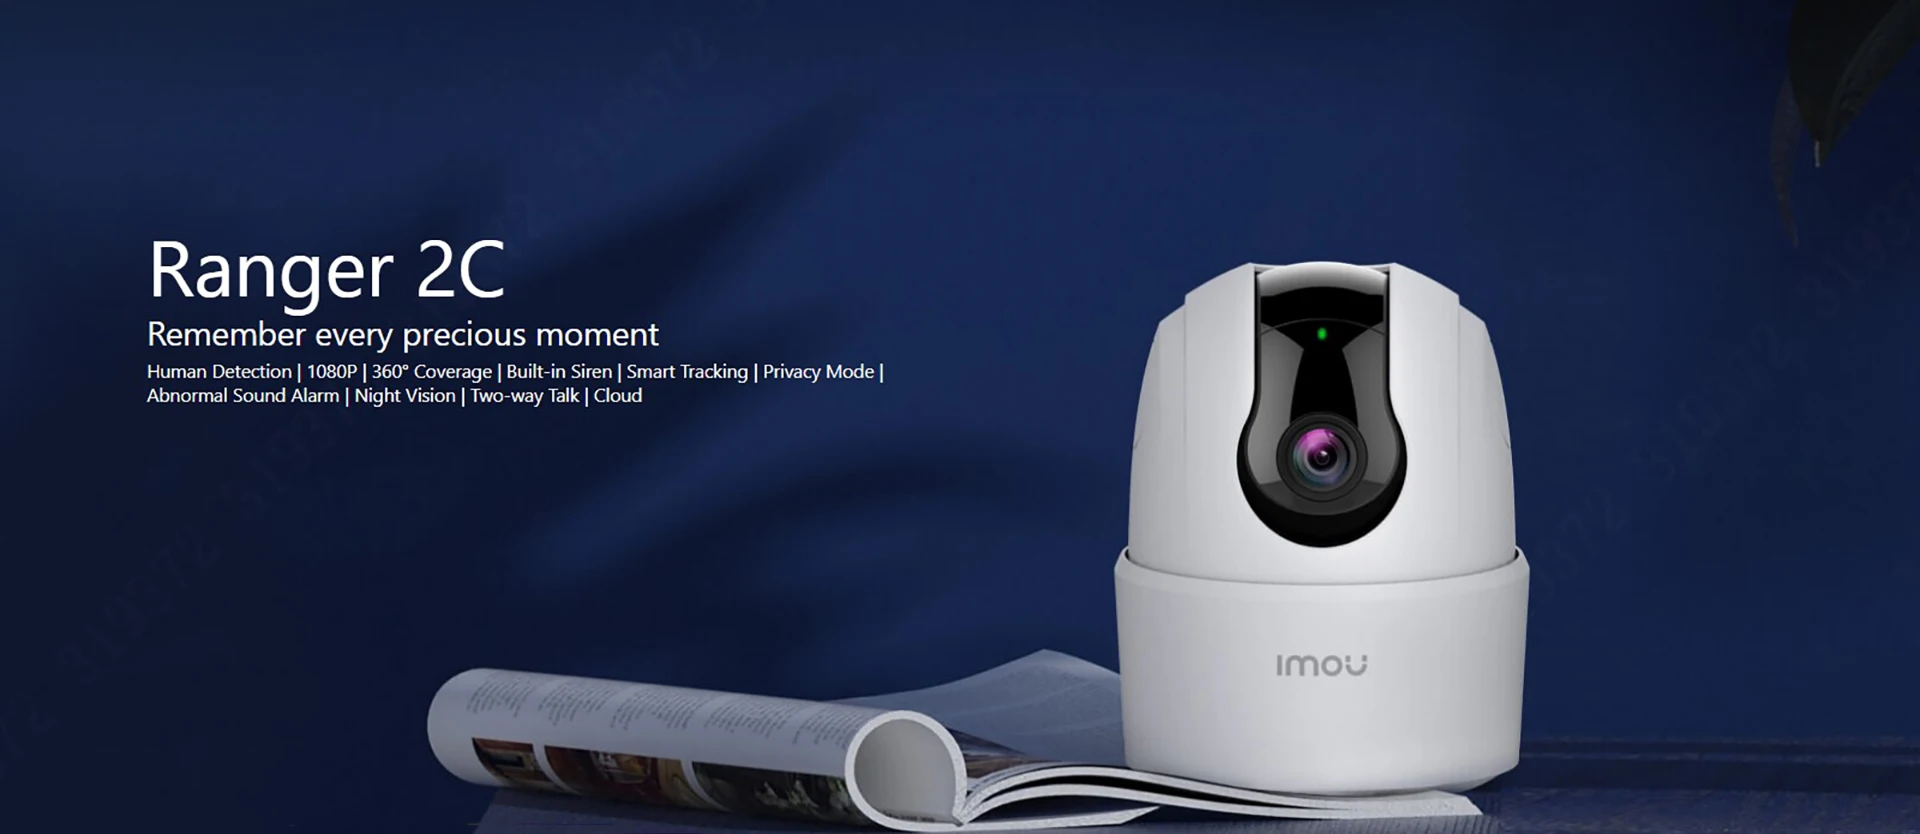 Dahua Imou Ranger 2C 4MP Home Wifi 360 Camera Human Detection Night Vision Baby Security Surveillance Wireless ip Camera